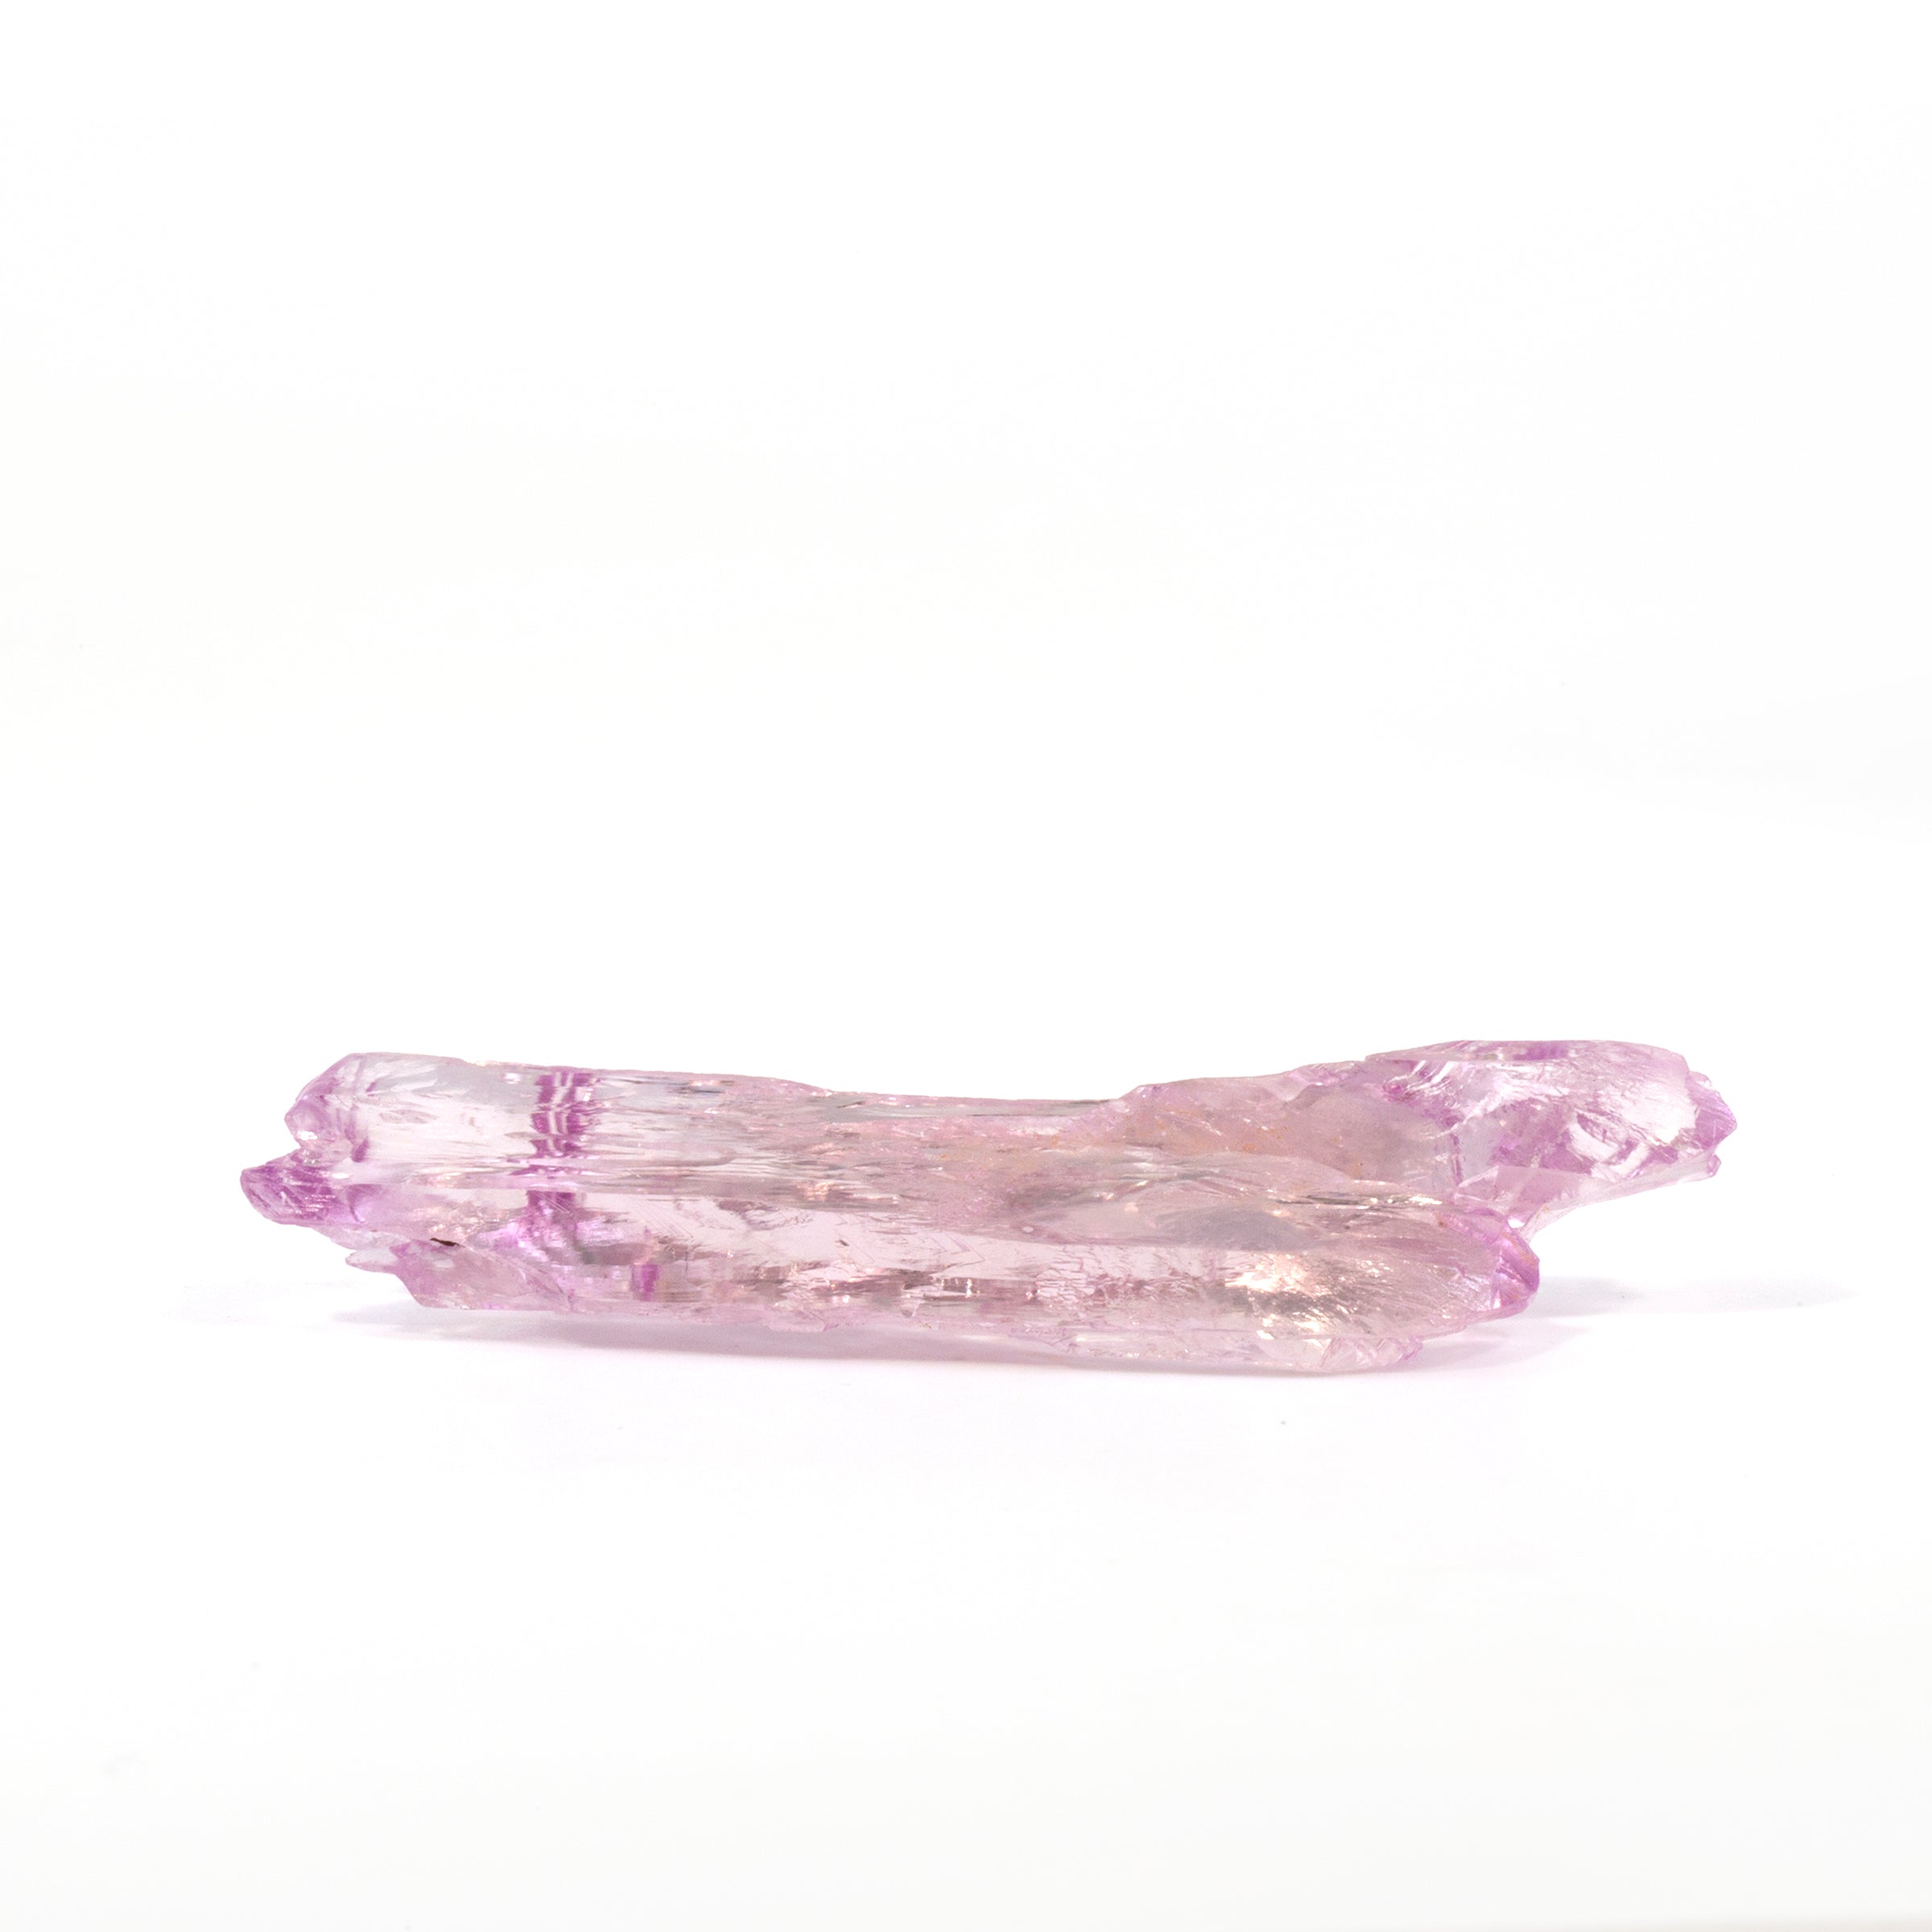 Kunzite 98 carat 67mm Natural Gem Crystal - Brazil - HHX-055 - Crystalarium